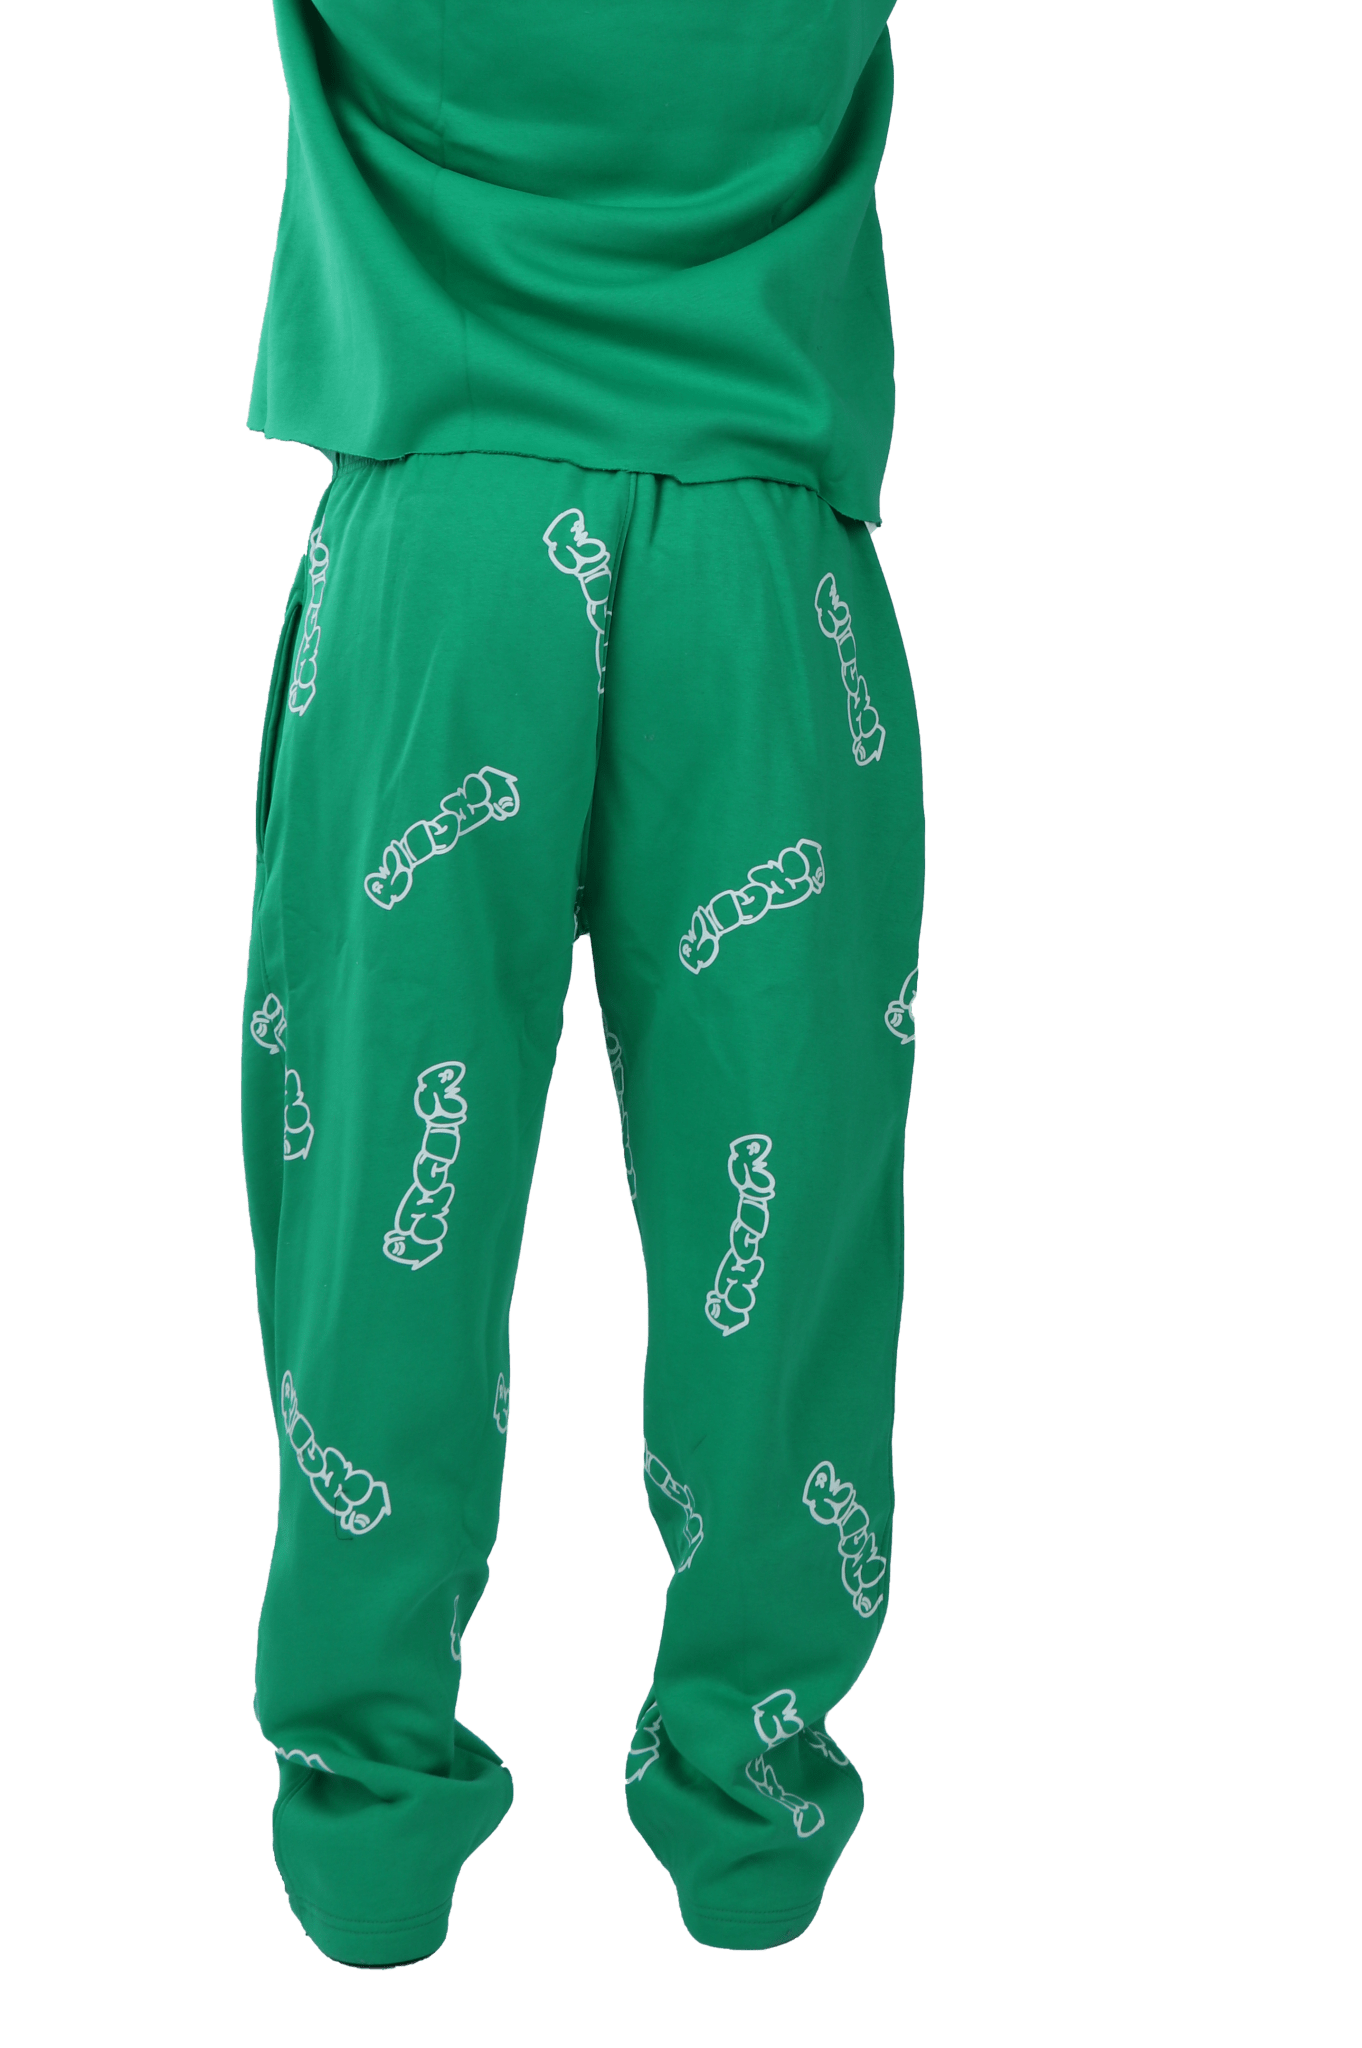 Patterned Green Richa Sweatpants - Richa UAE